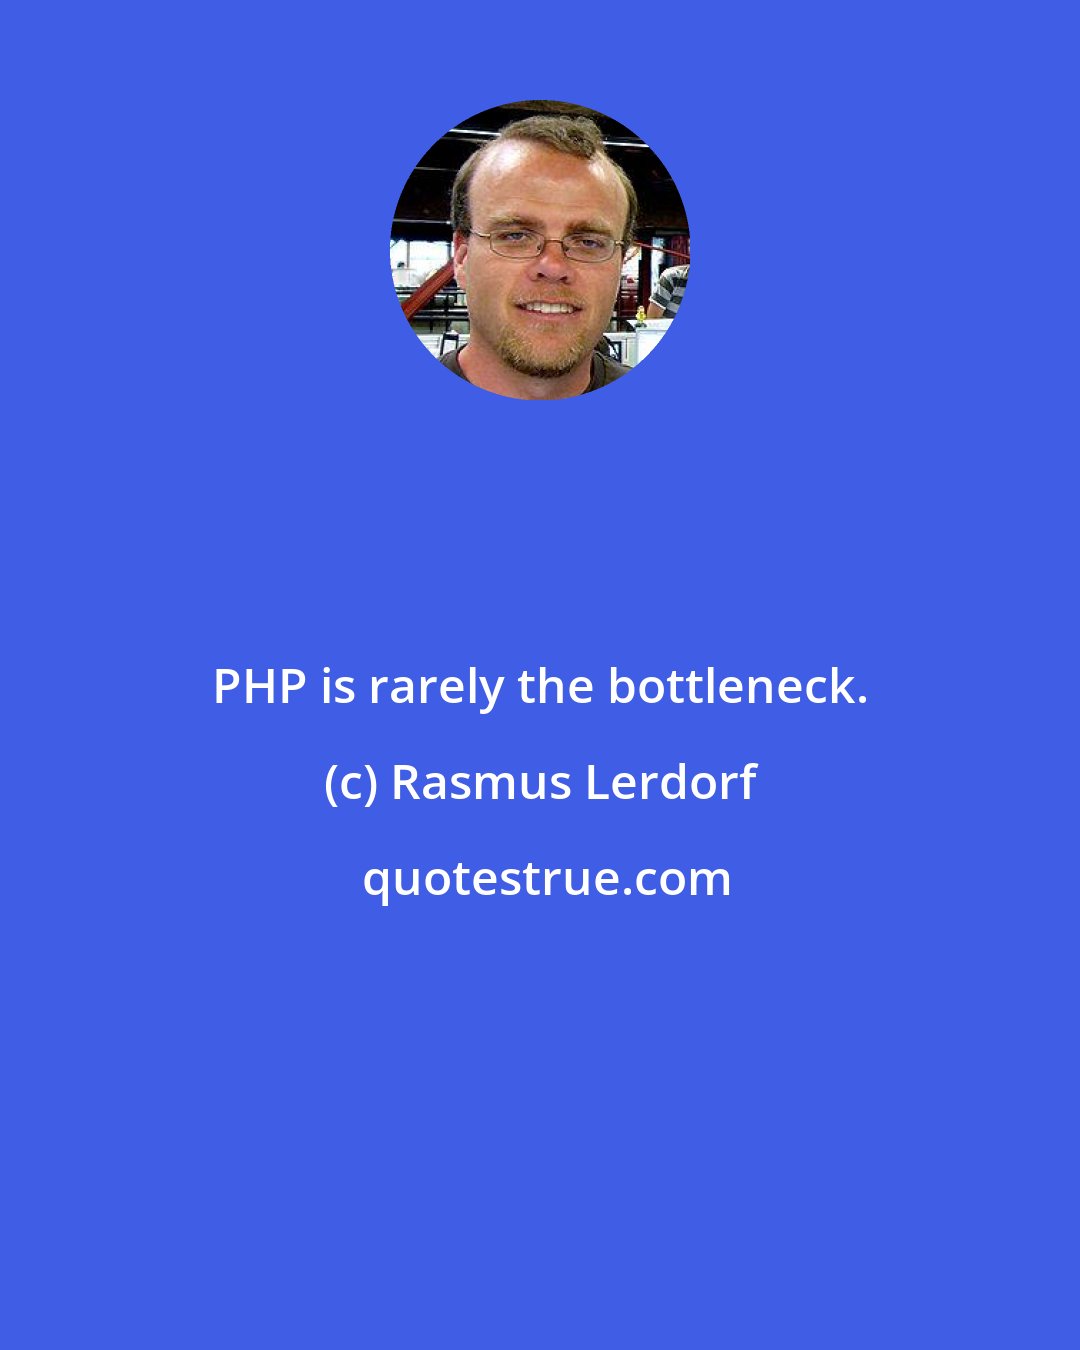 Rasmus Lerdorf: PHP is rarely the bottleneck.